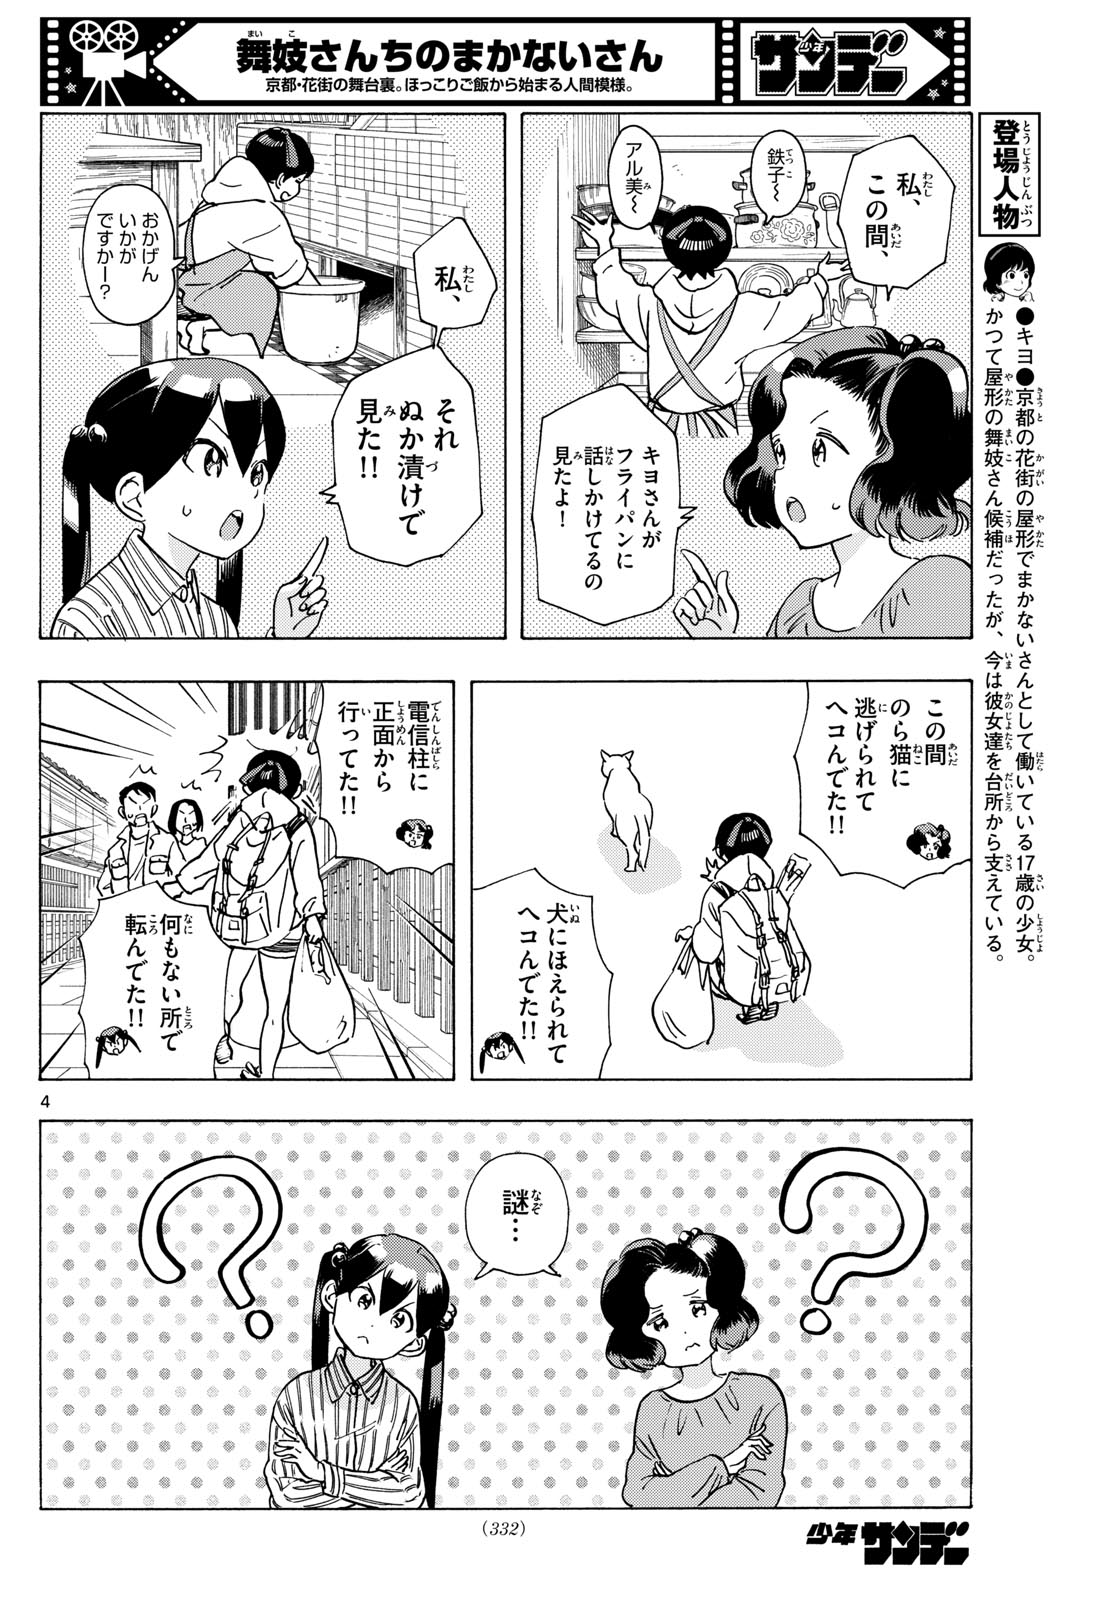 Maiko-san Chi no Makanai-san - Chapter 289 - Page 4